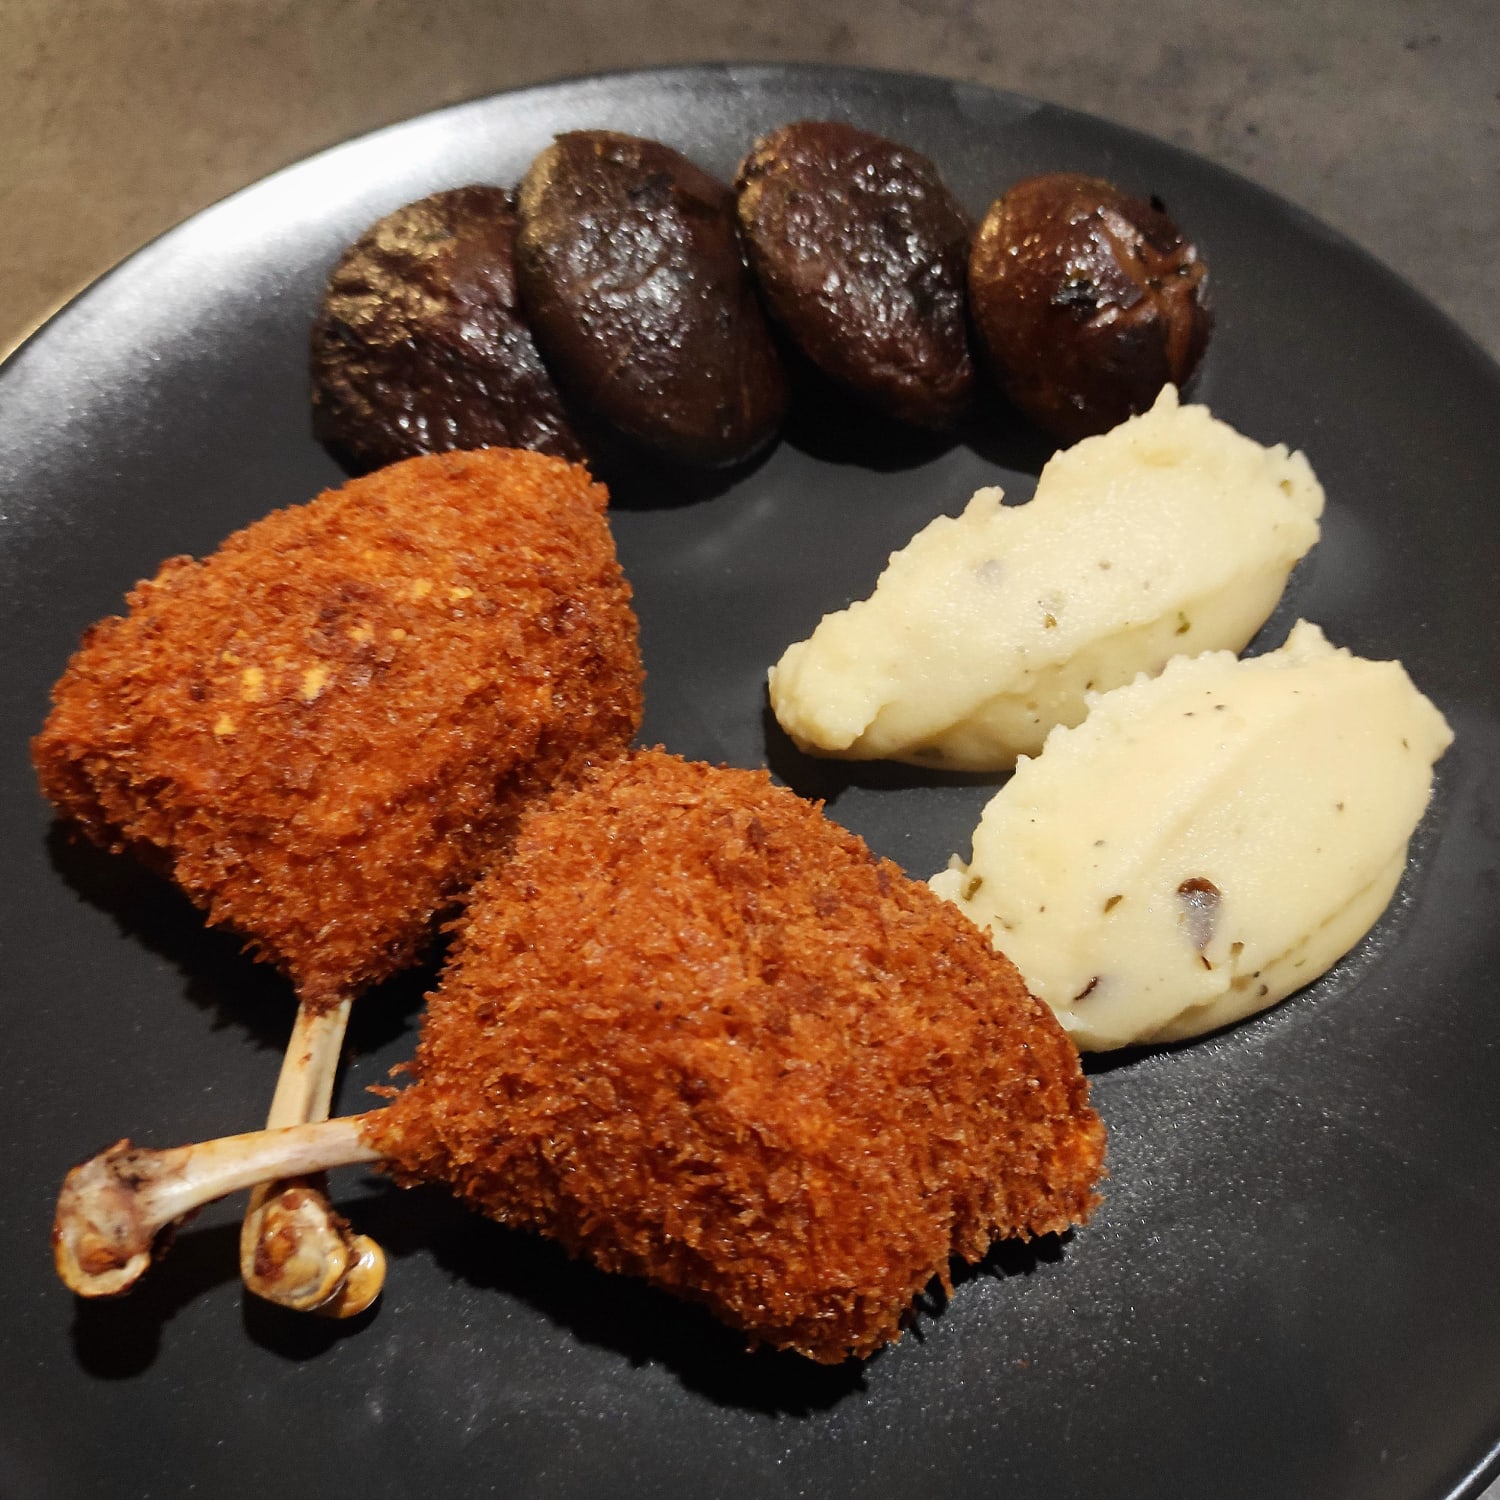 [Homemade] panko fried duck drumsticks, shiitake mushrooms, mashed potatoes